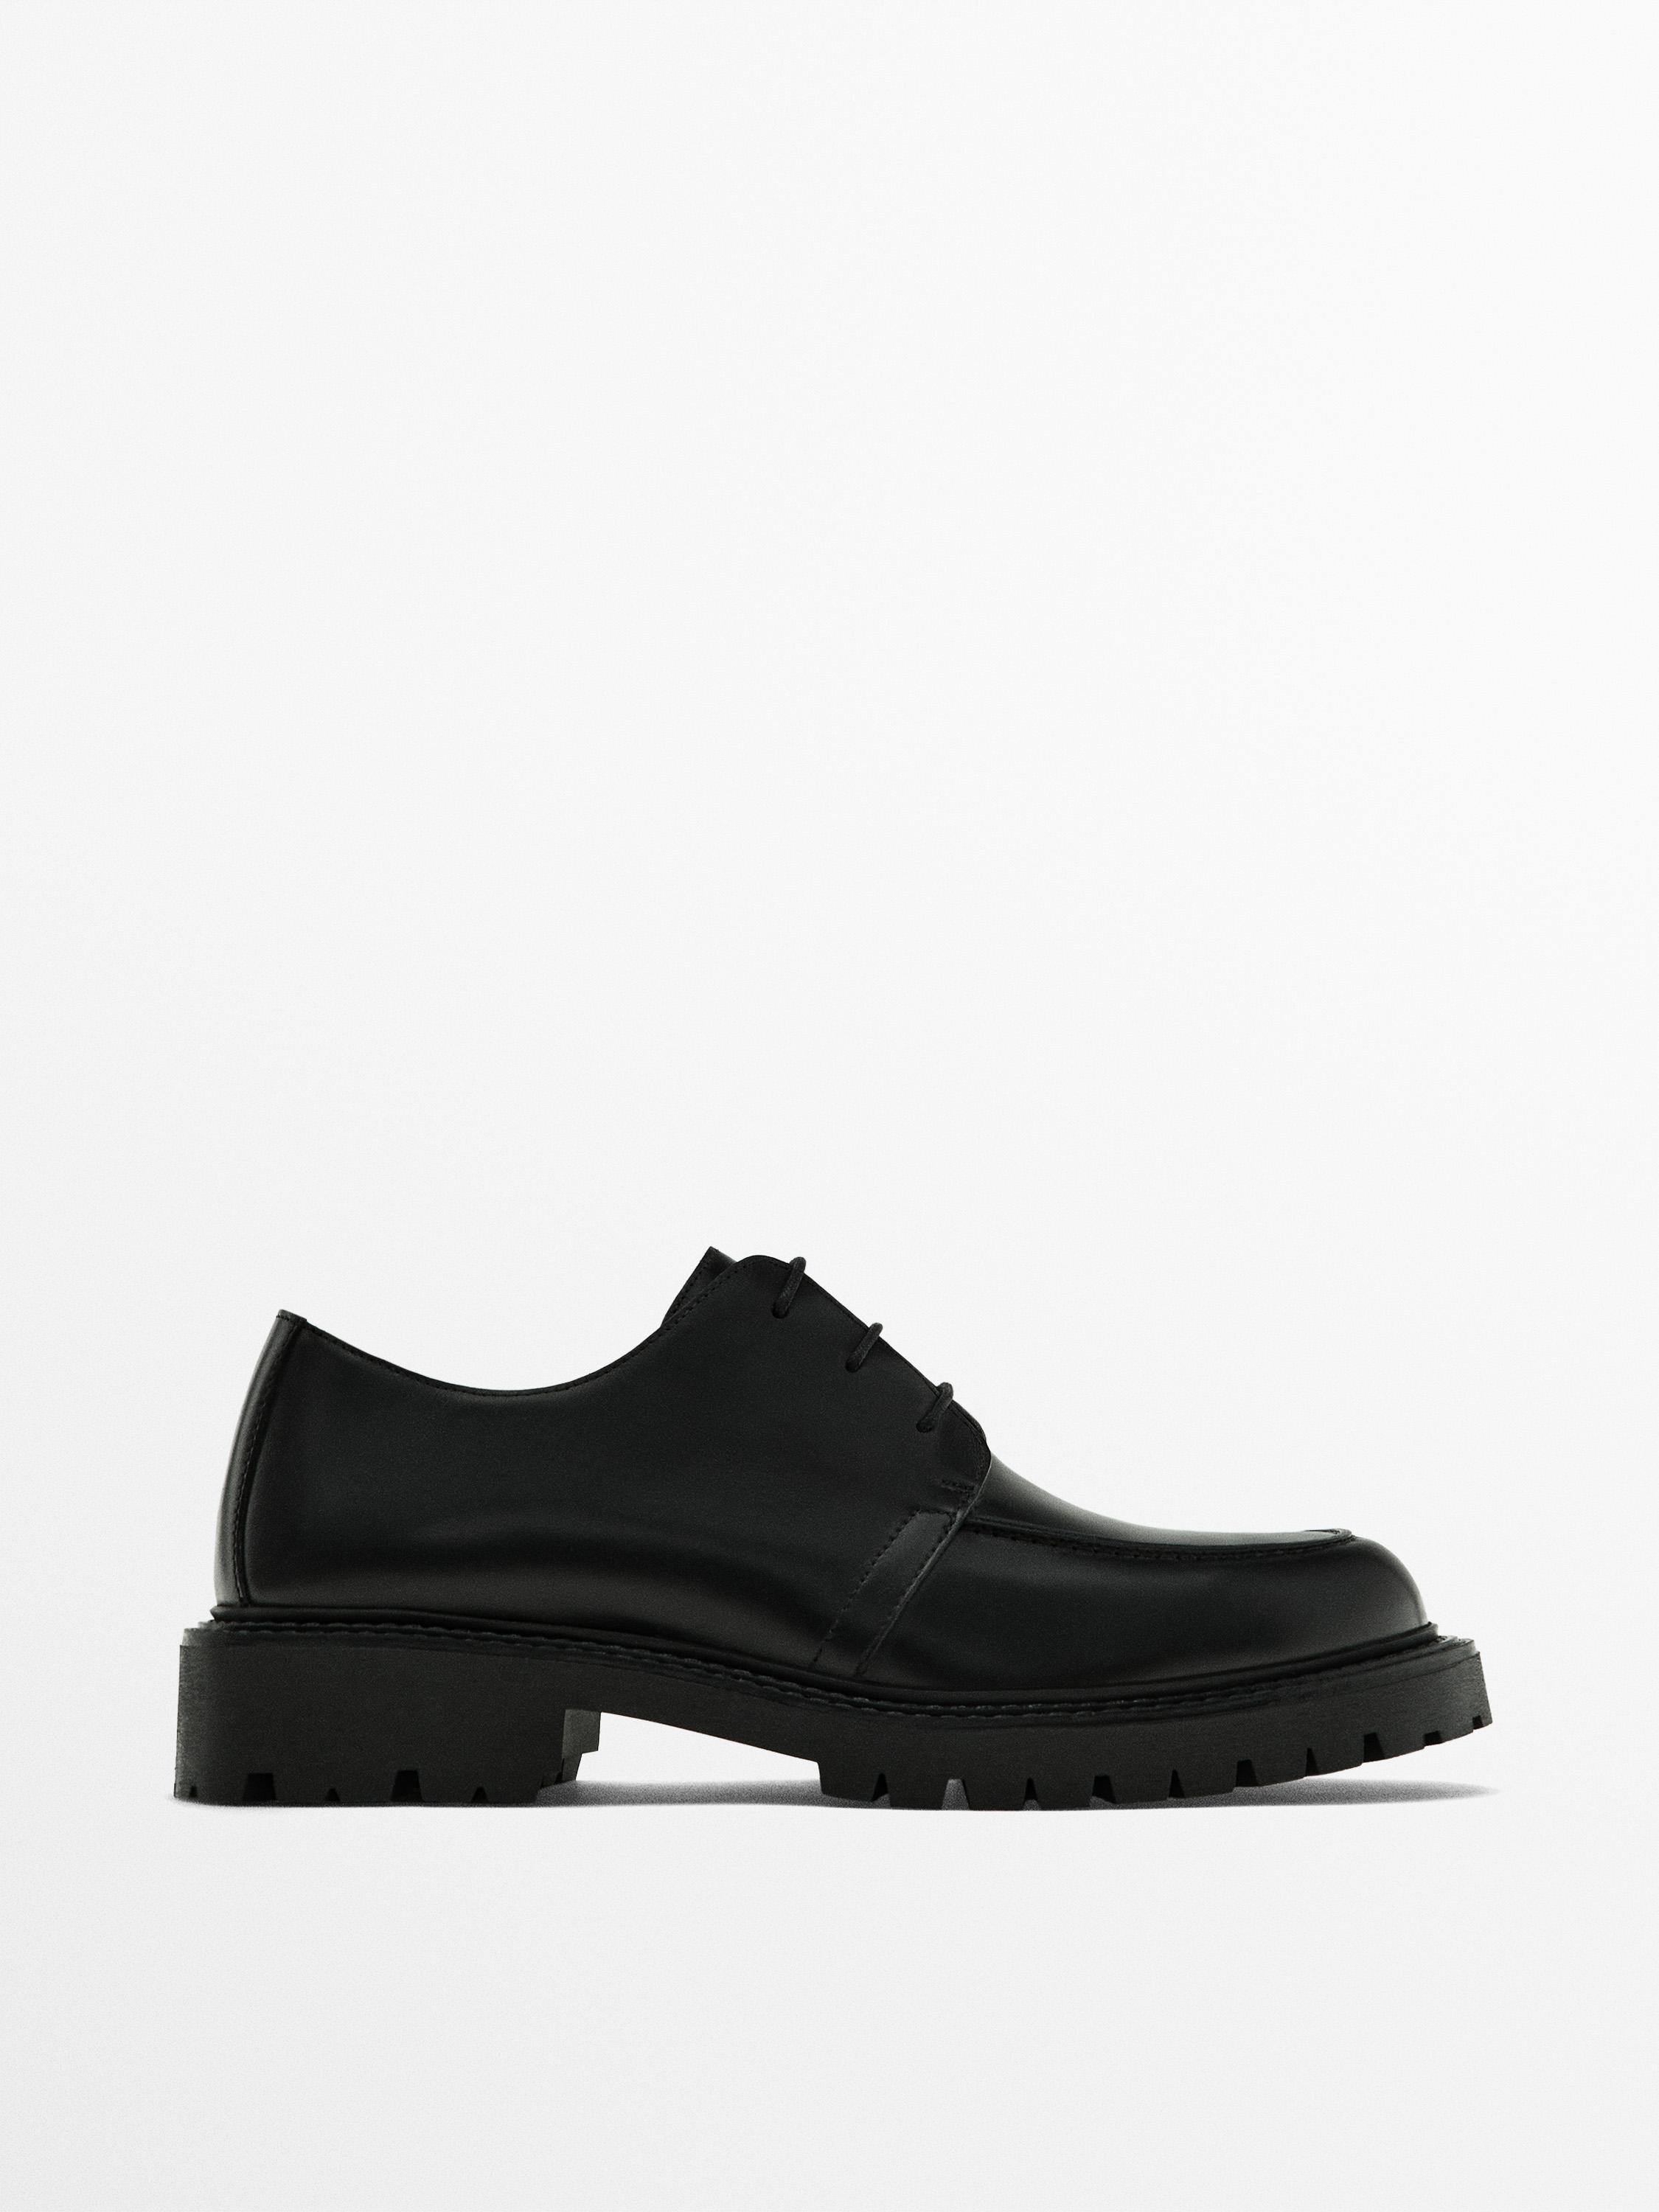 Black moc toe shoes - Black | ZARA United States